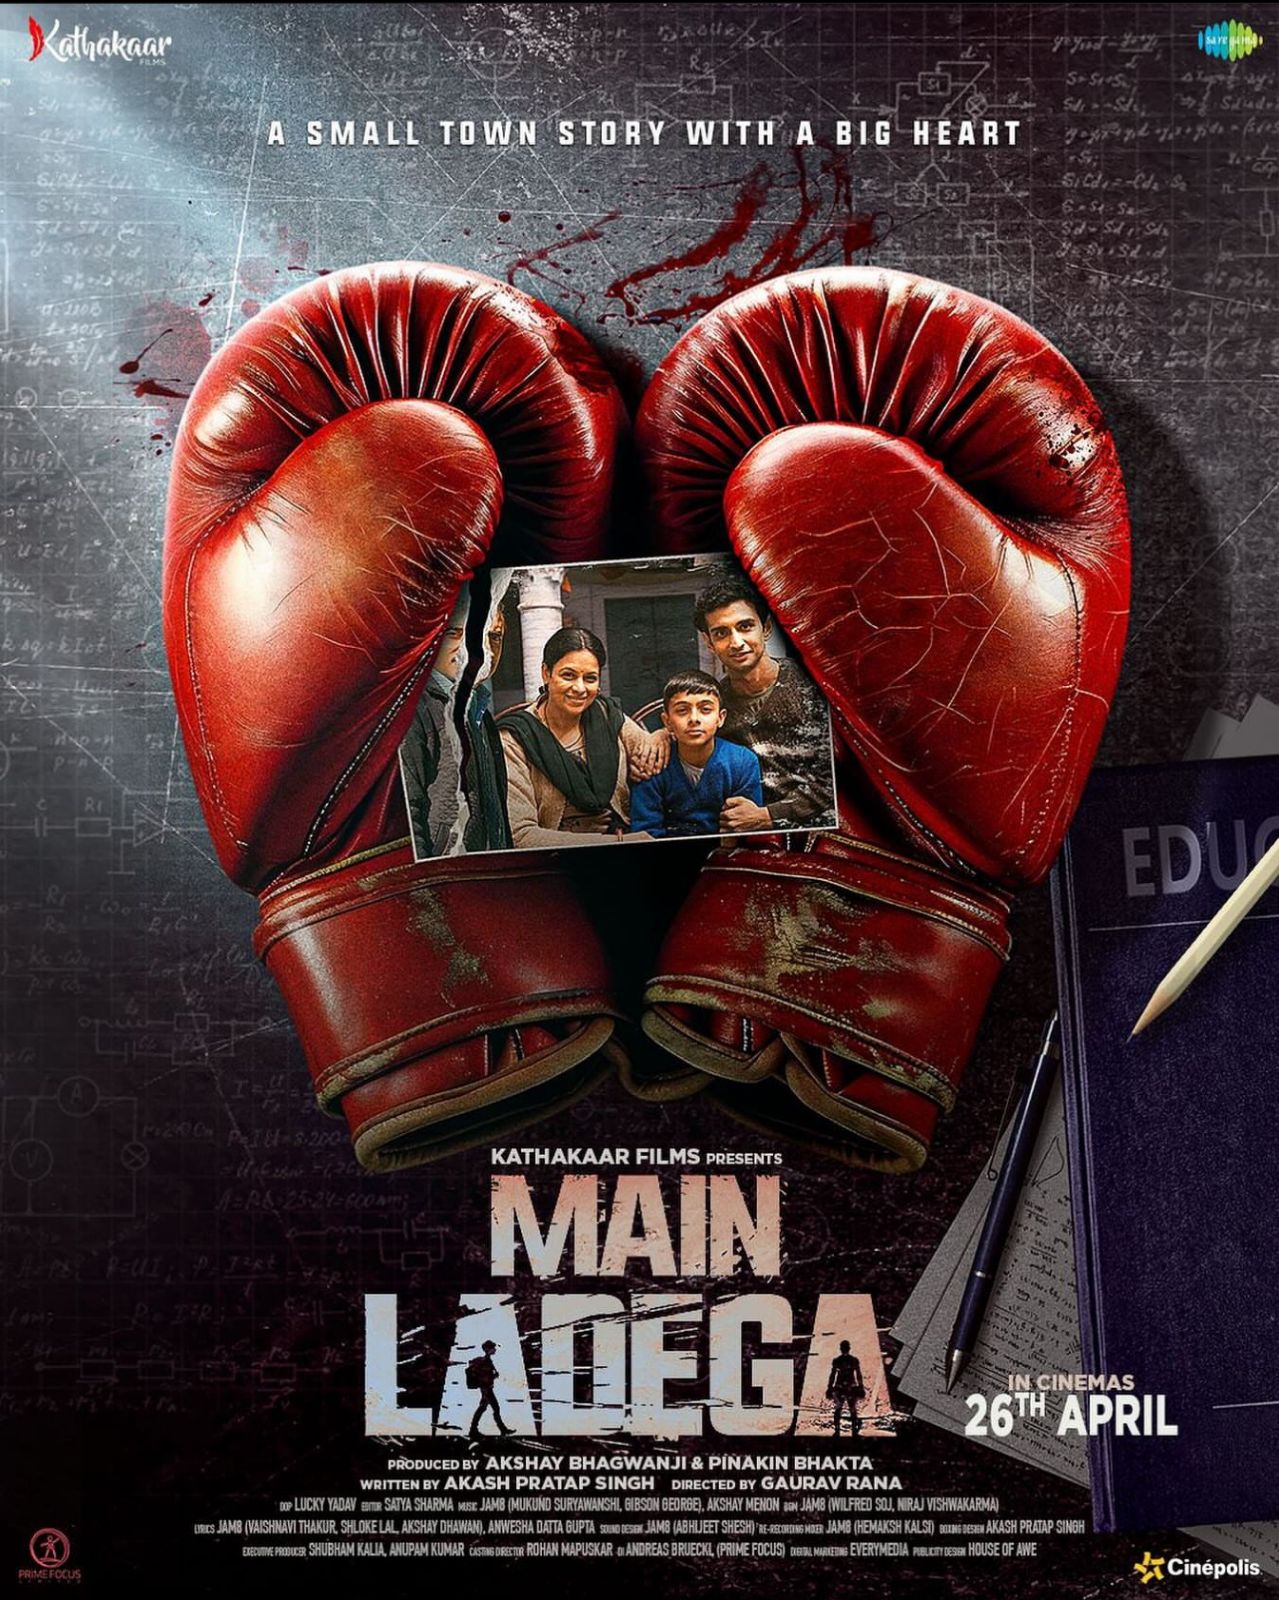 Akash Pratap Singh’s film Main Ladega produced by Akshay Bhagwanji and Pinakin Bhakta, packs a solid punch with its first poster